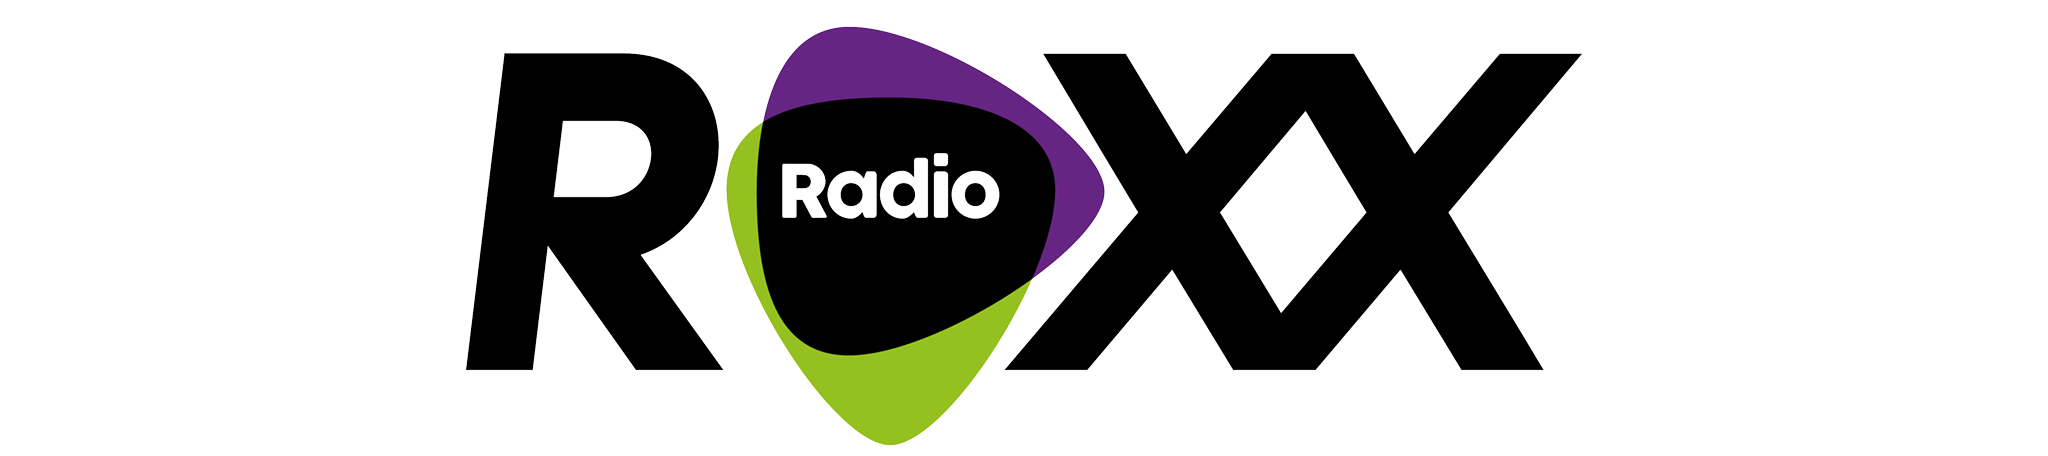 roxx-logo